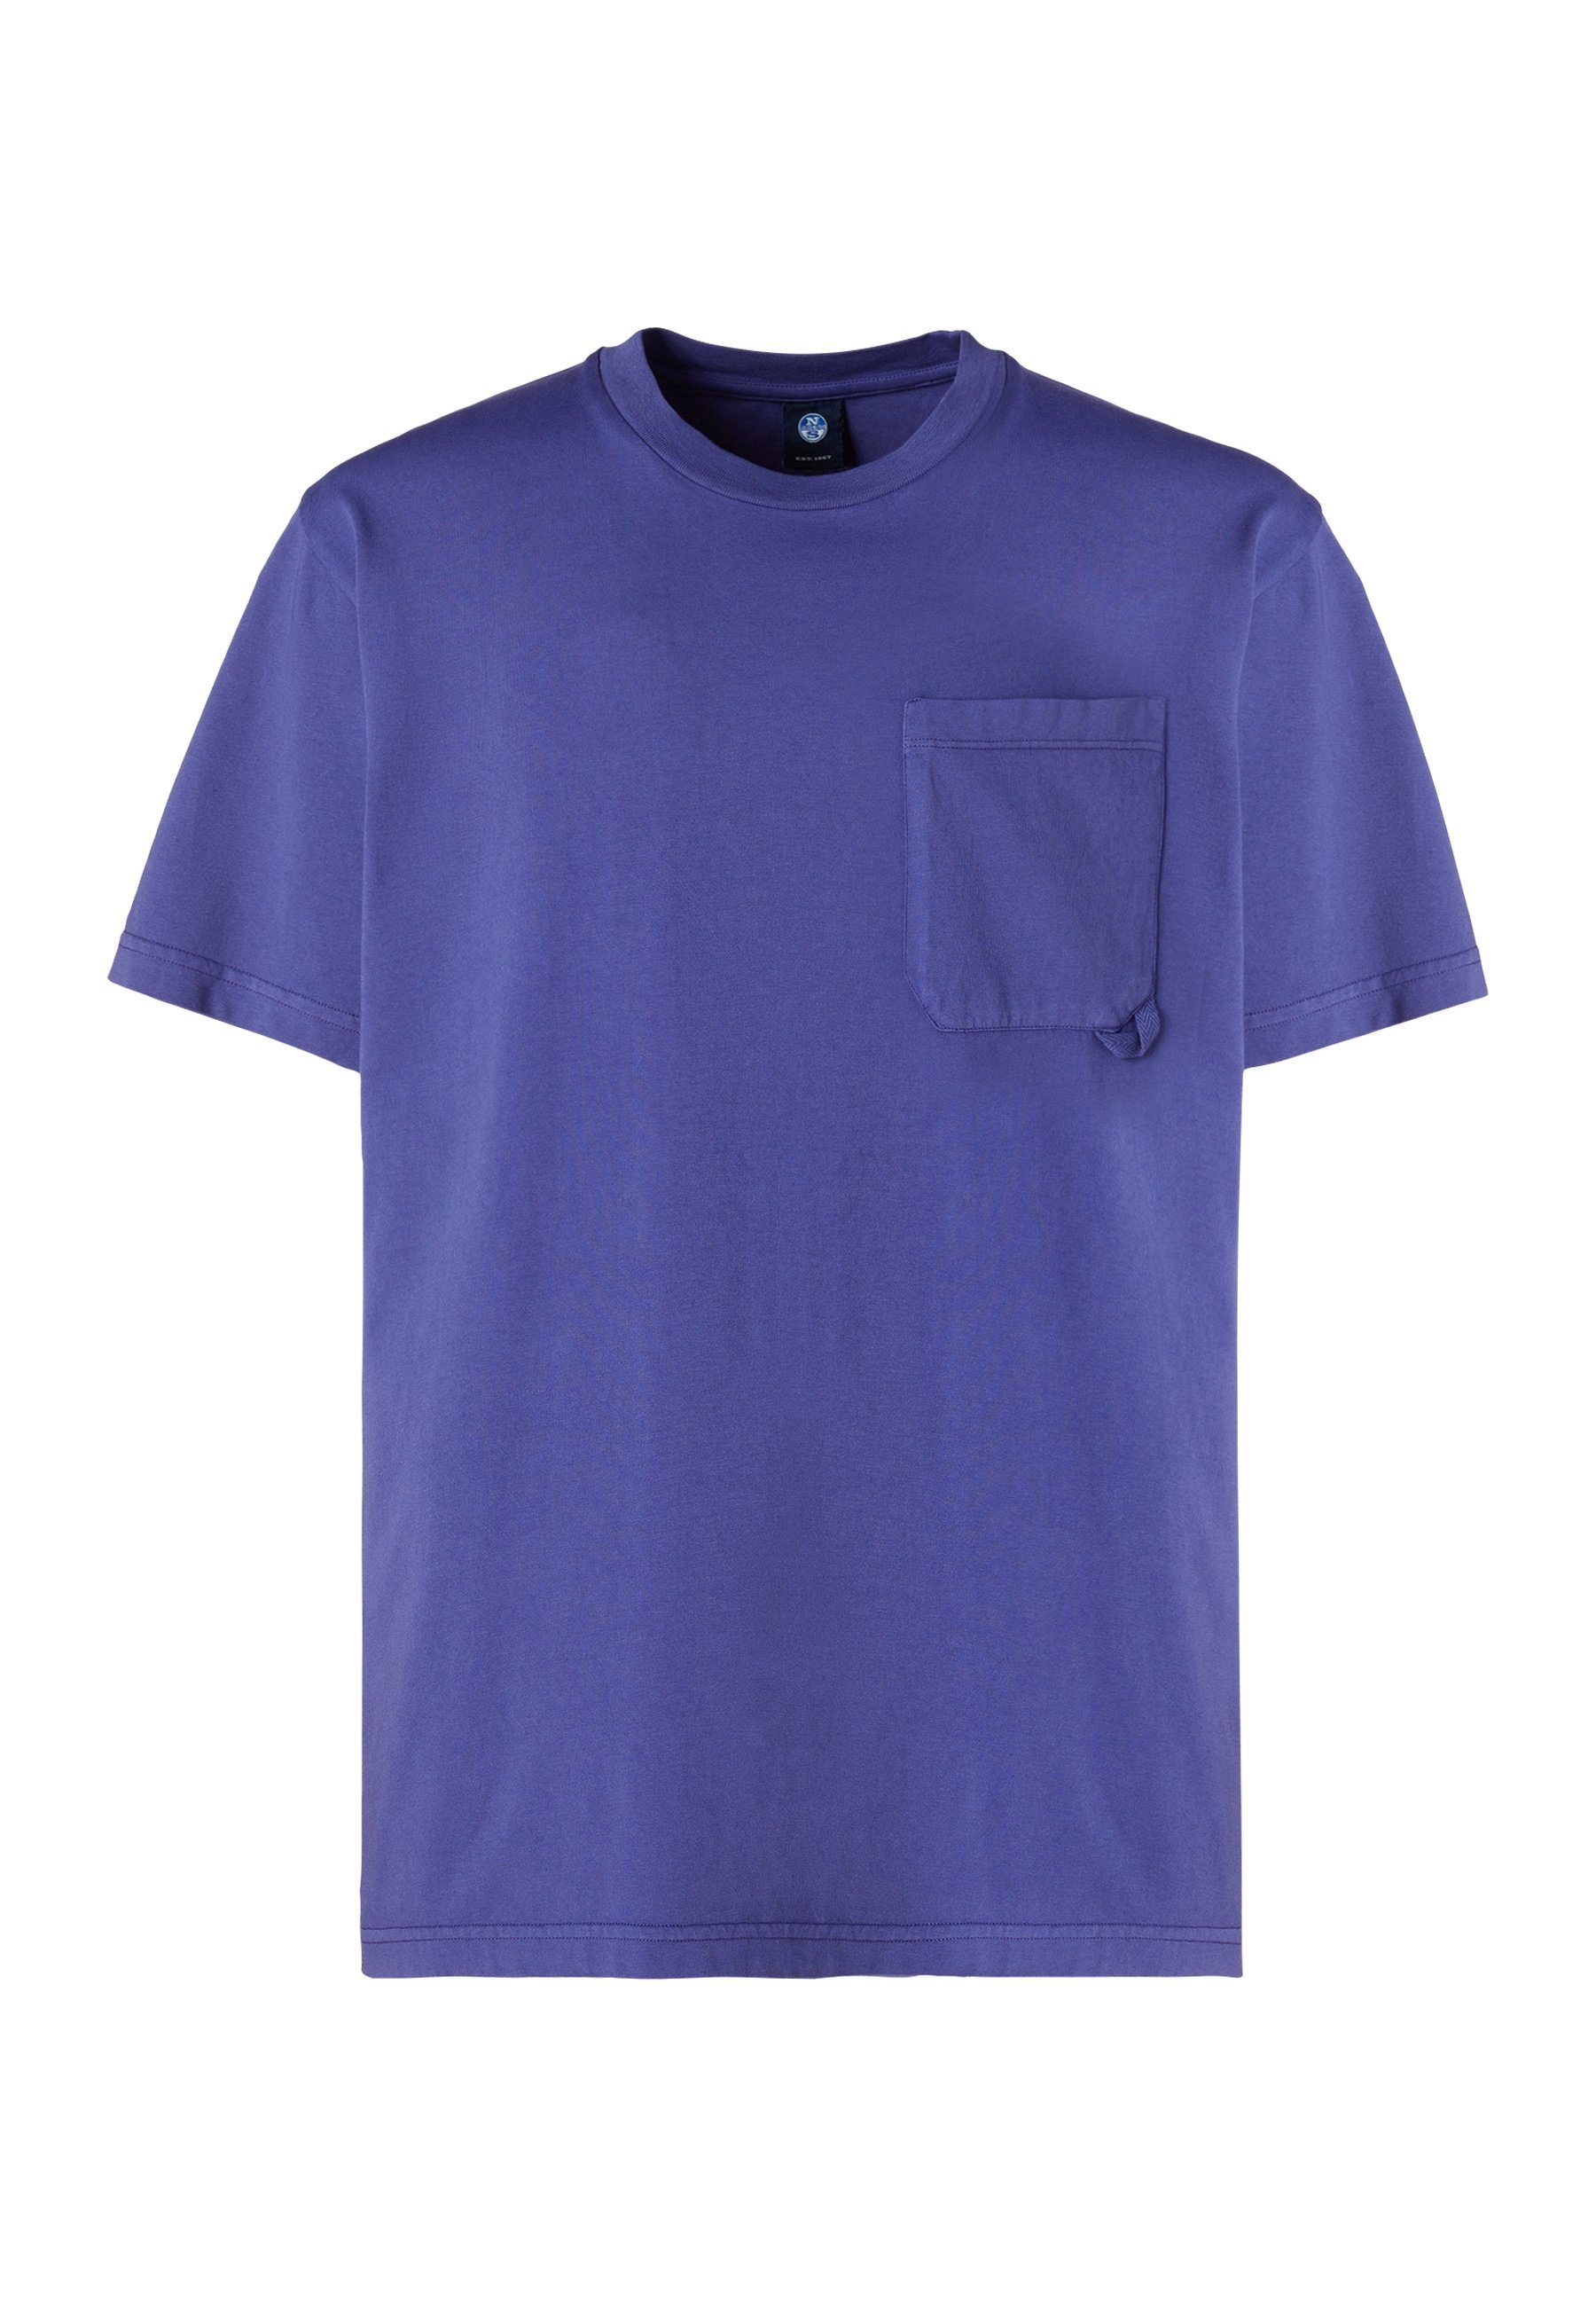 Sails BLUE kurzen T-Shirt T-Shirt mit Ärmeln North WAVE C2